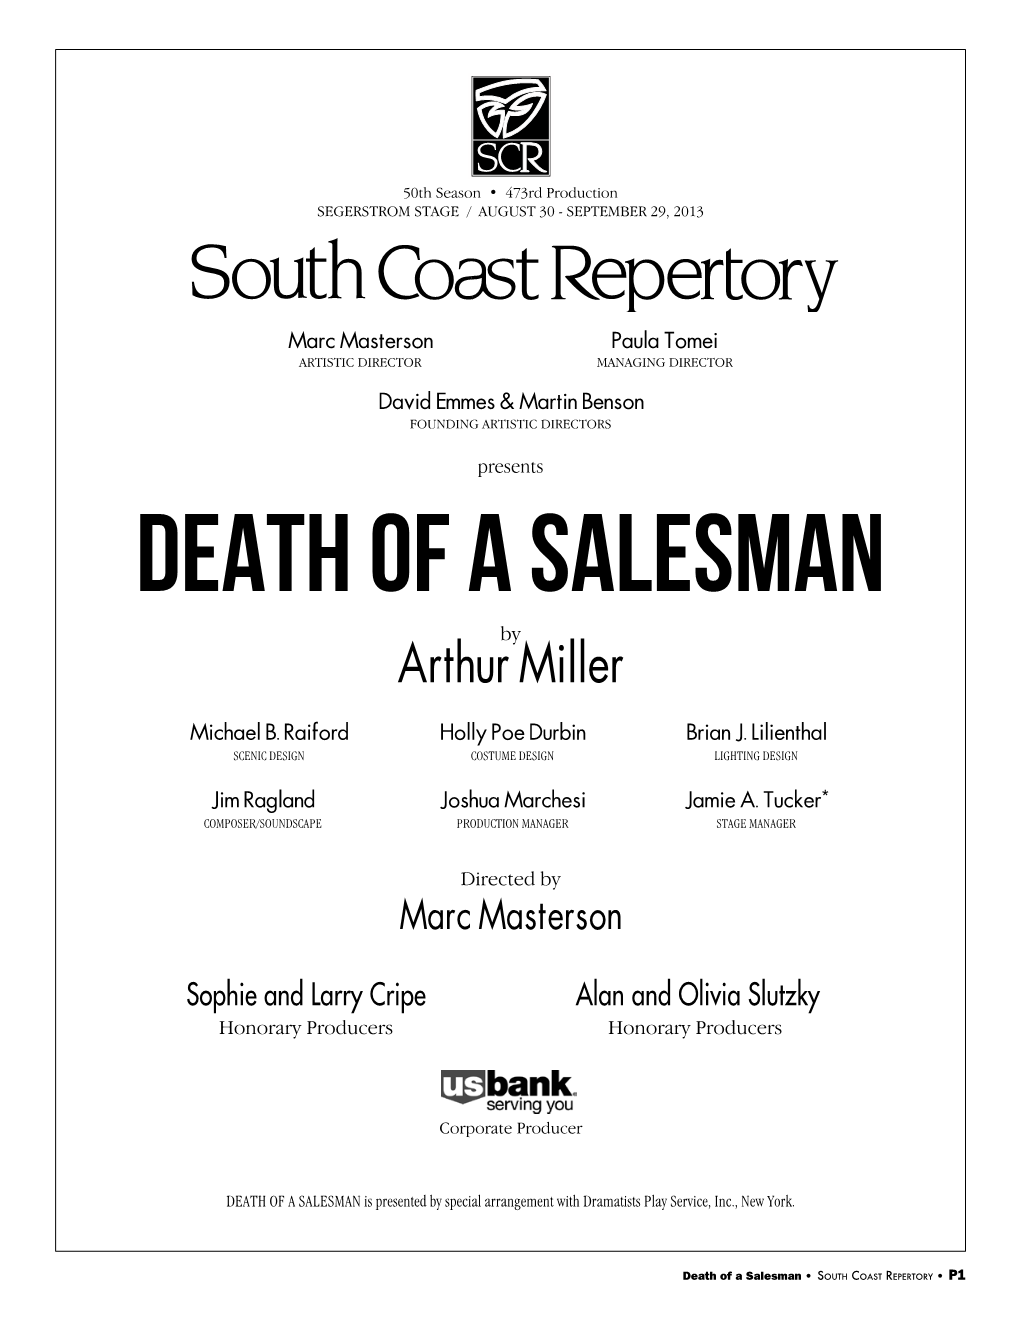 DEATH of a SALESMAN by Arthur Miller